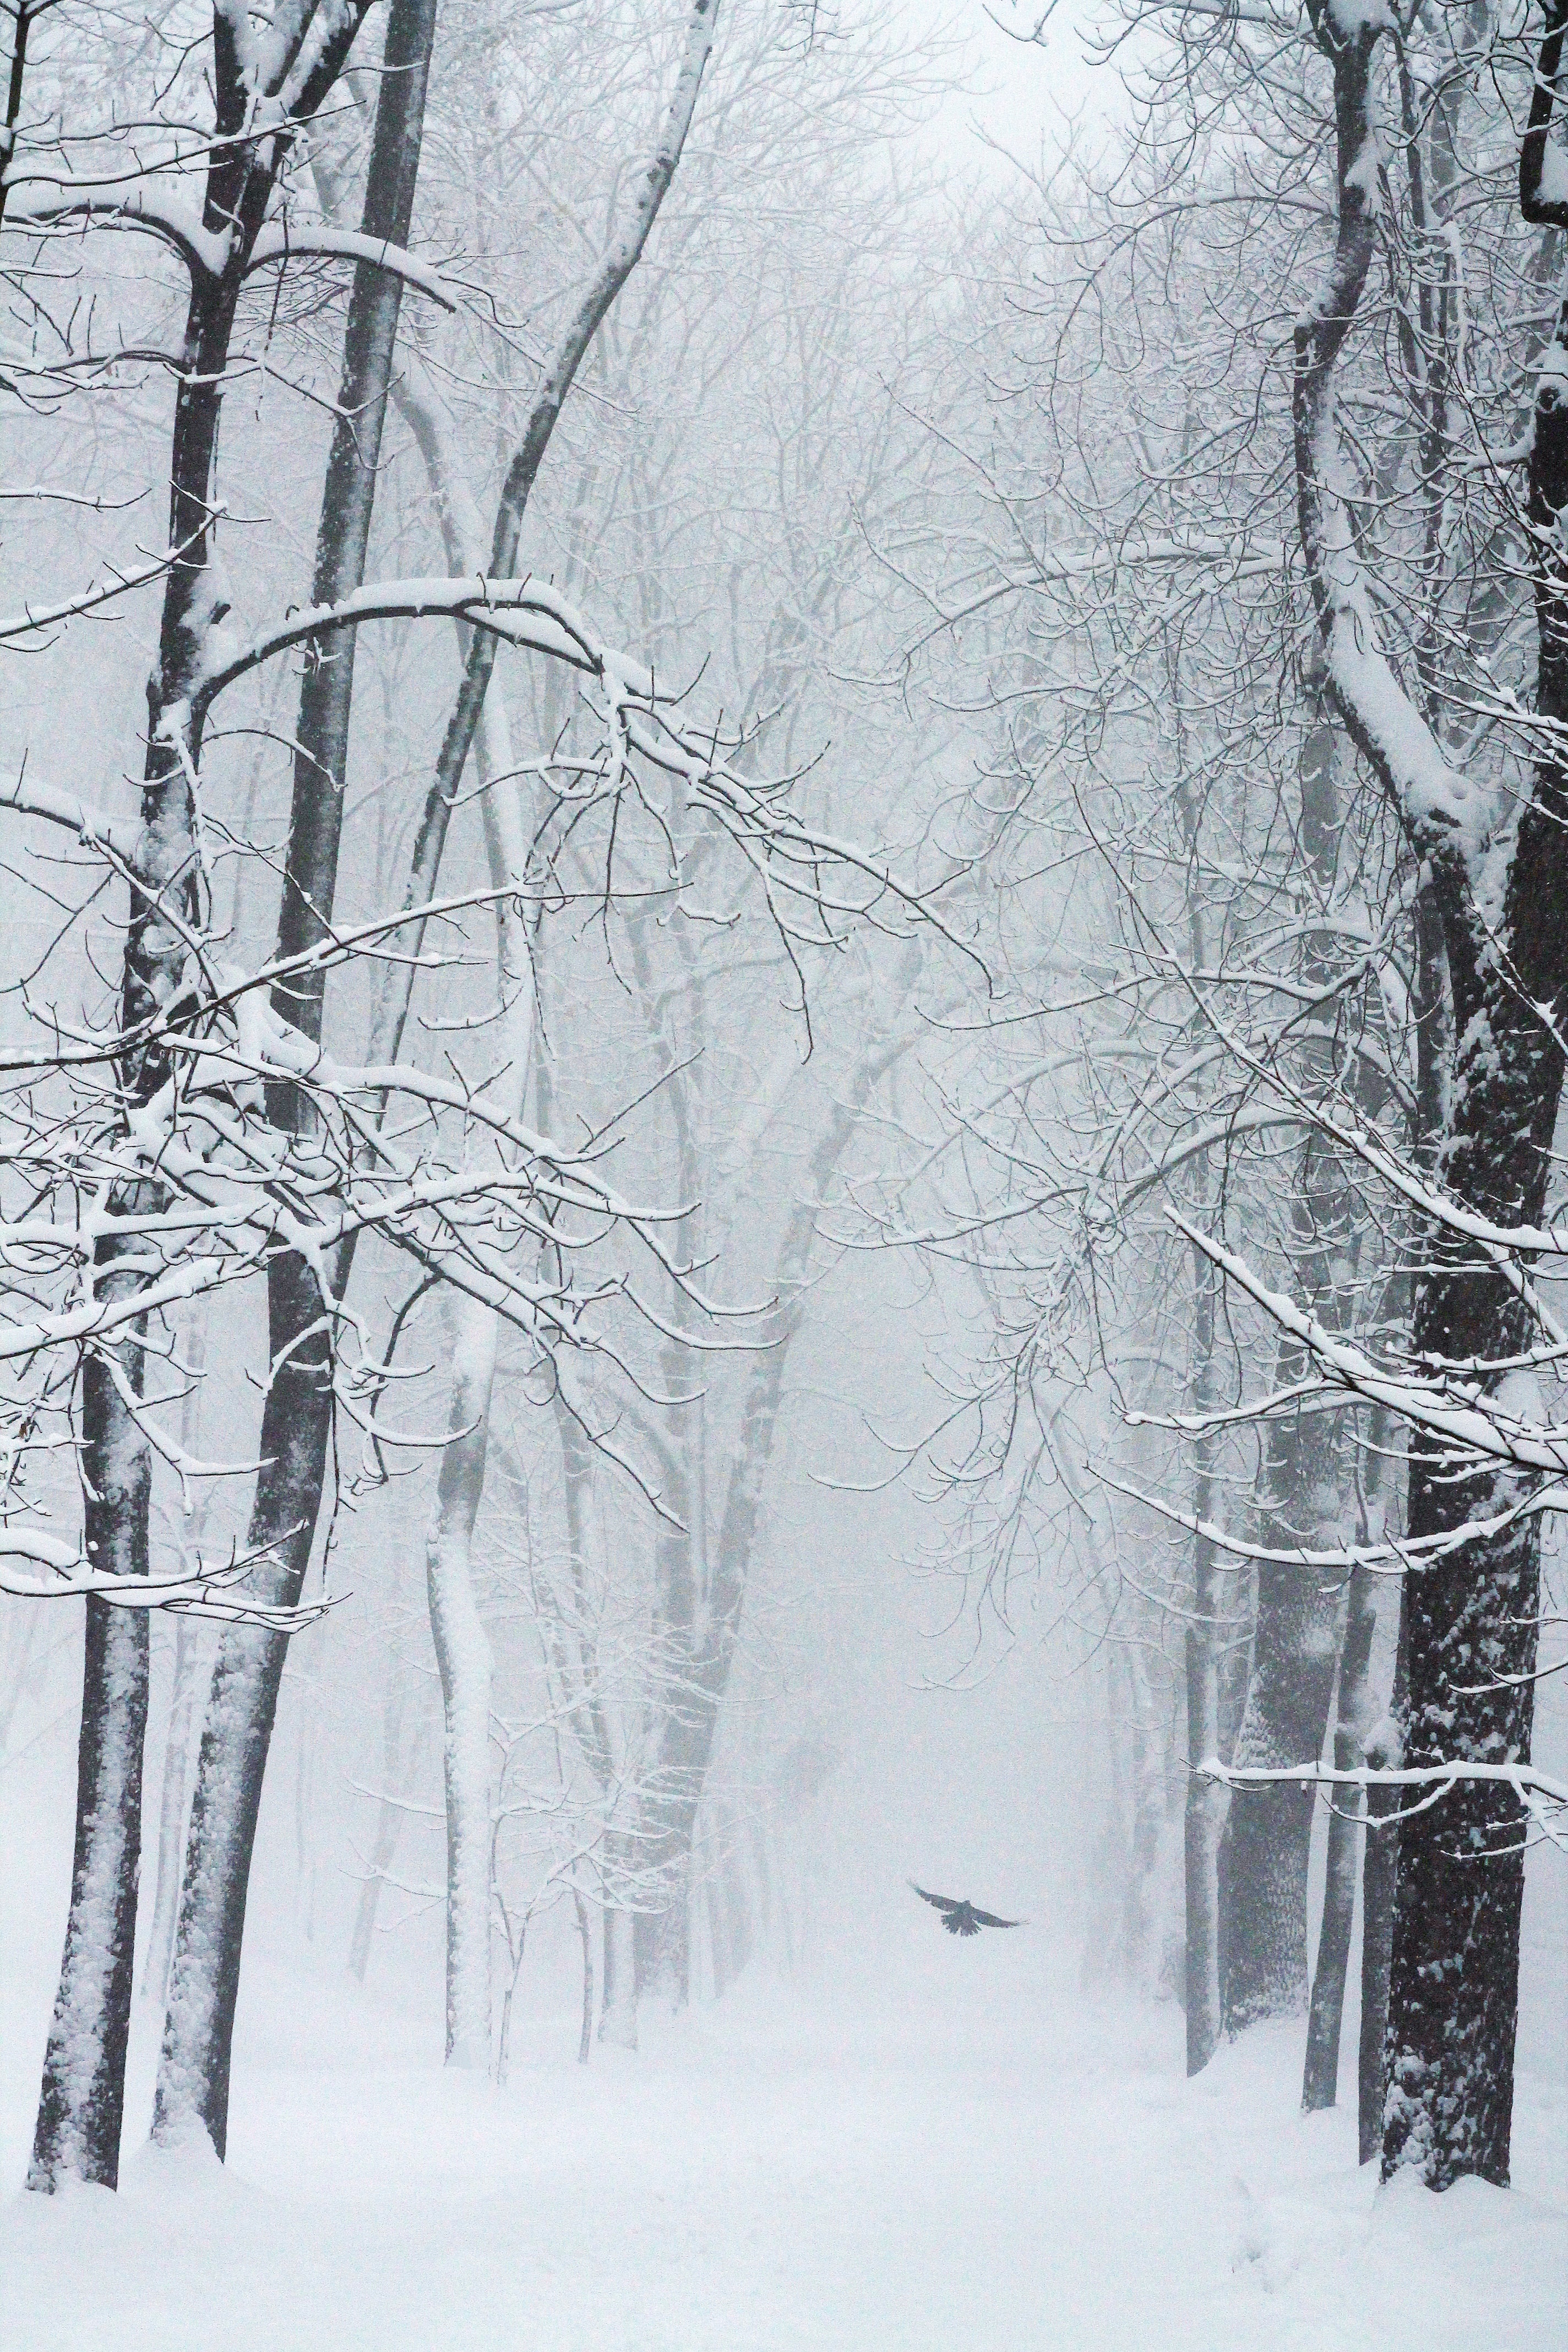 snowstorm, winter, nature, trees, snow, bird